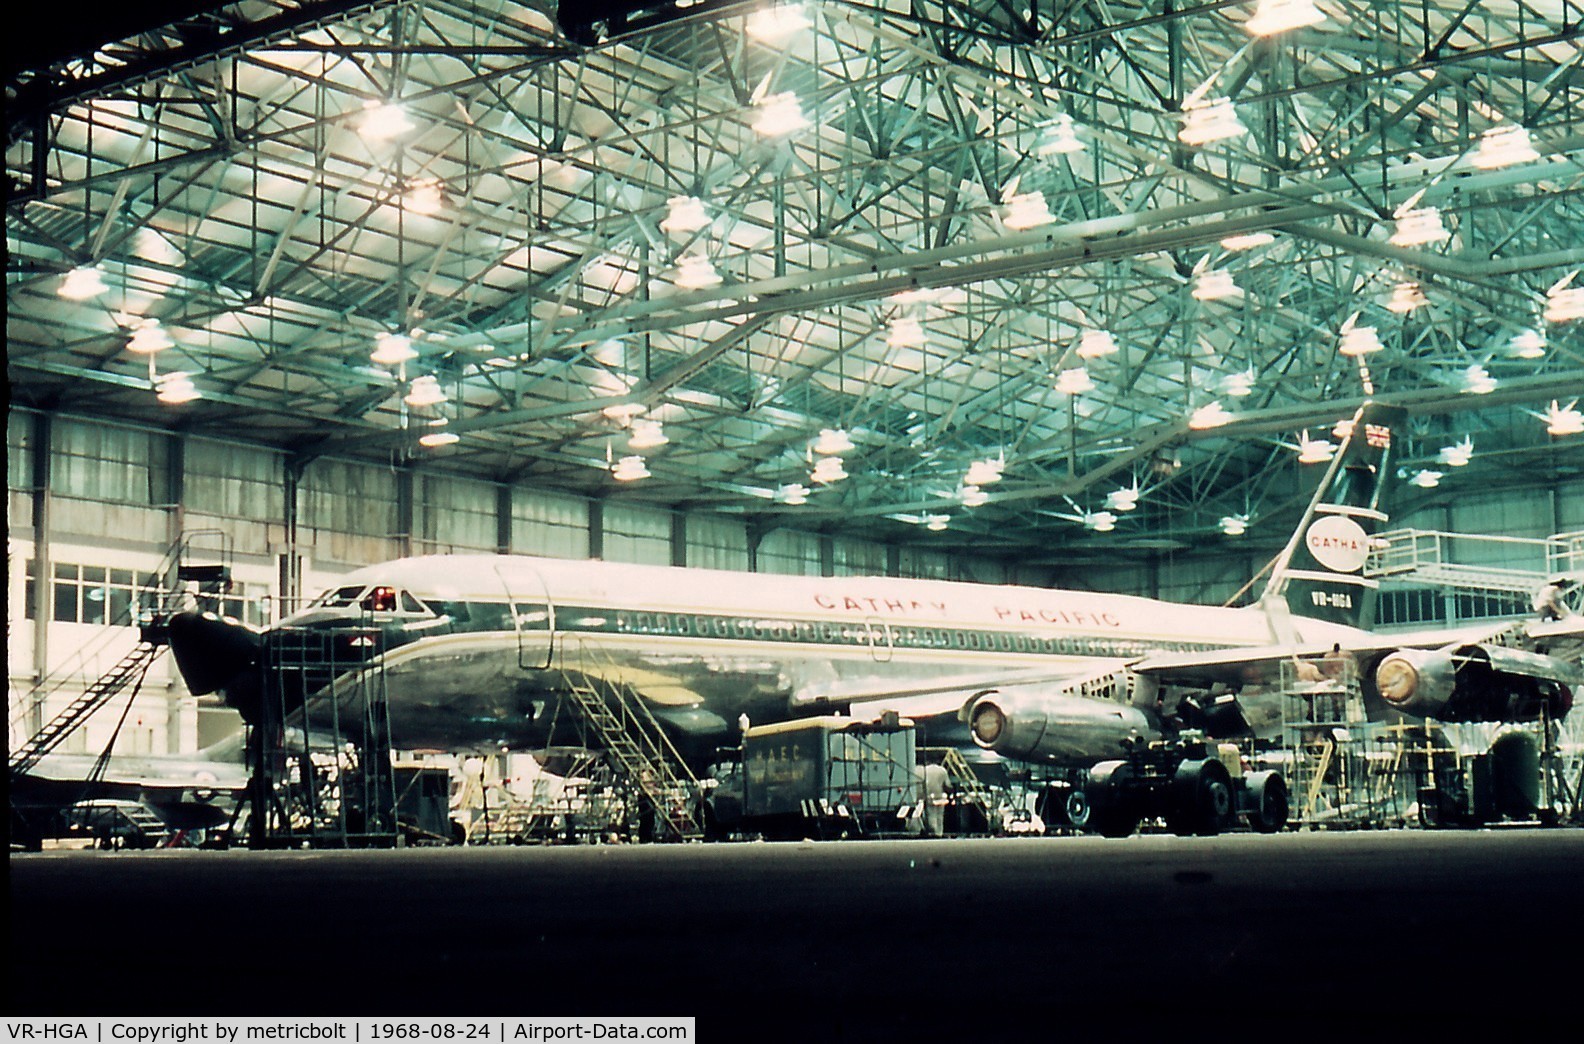 VR-HGA, 1961 Convair 880-22M-4 C/N 22-00-44M, Maintenance at the HAECO hangar,Kai Tak airport,Hongkong.